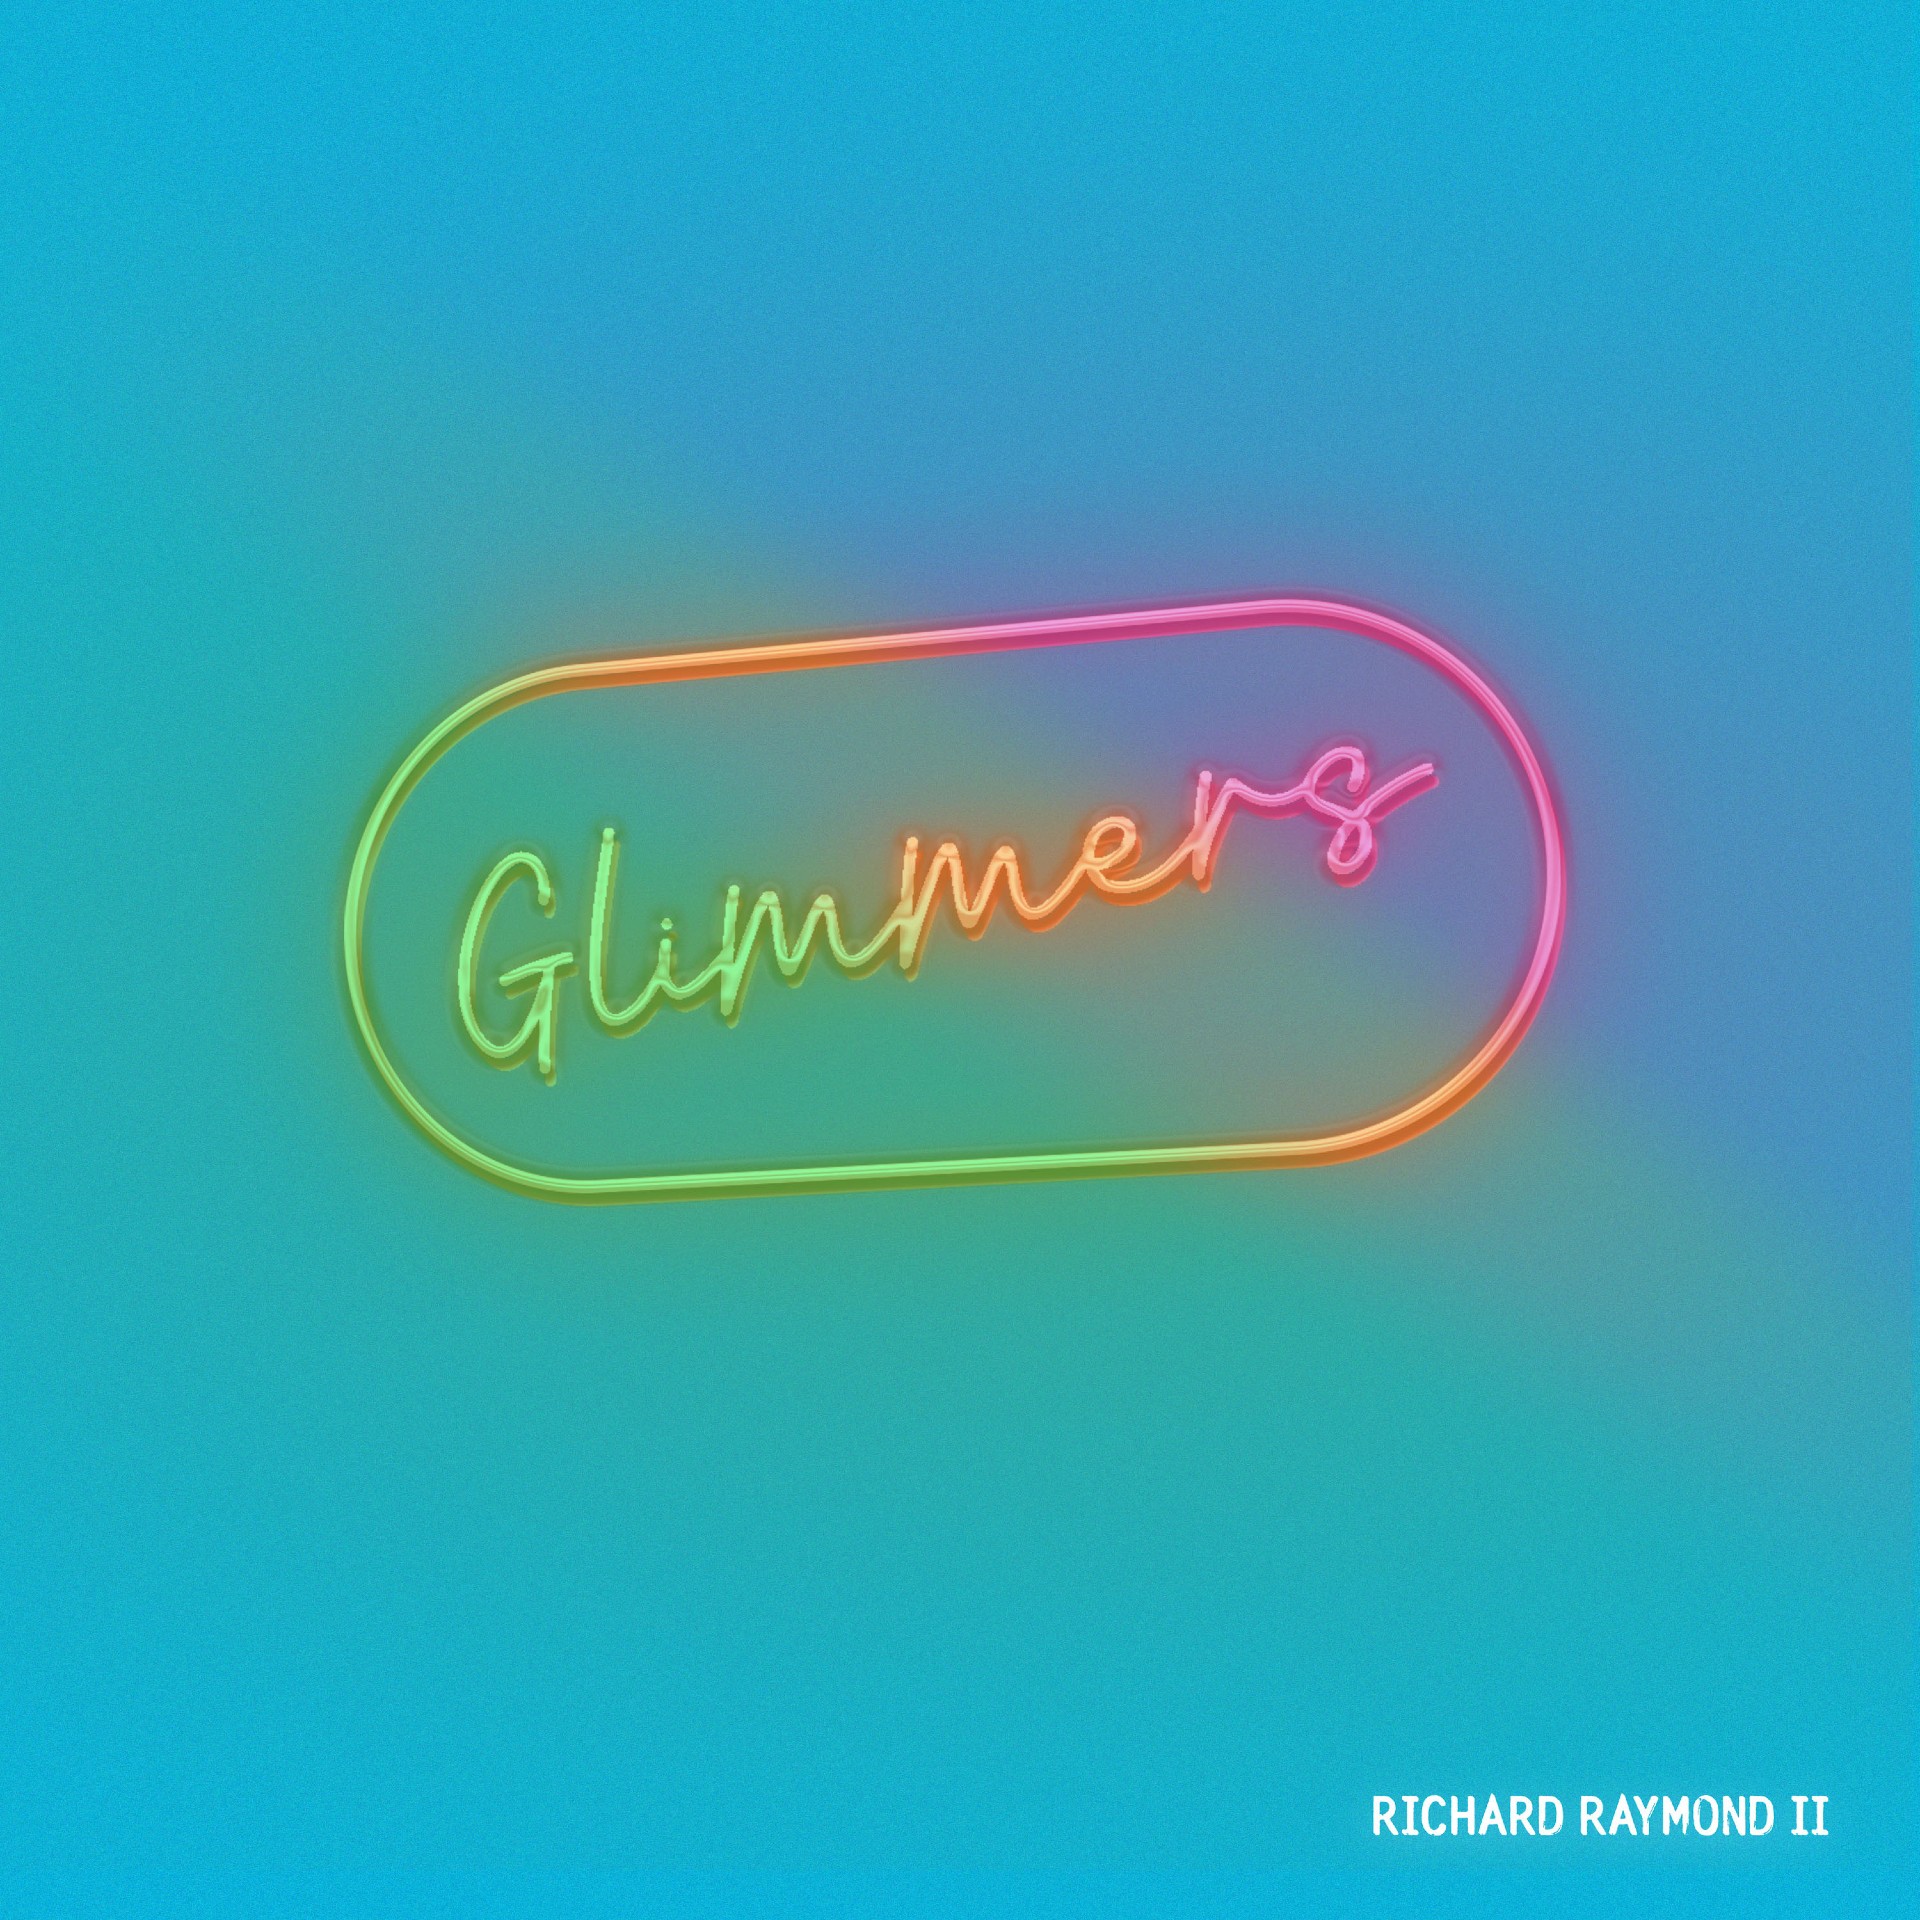 Richard Raymond II ‘Glimmers’ album artwork